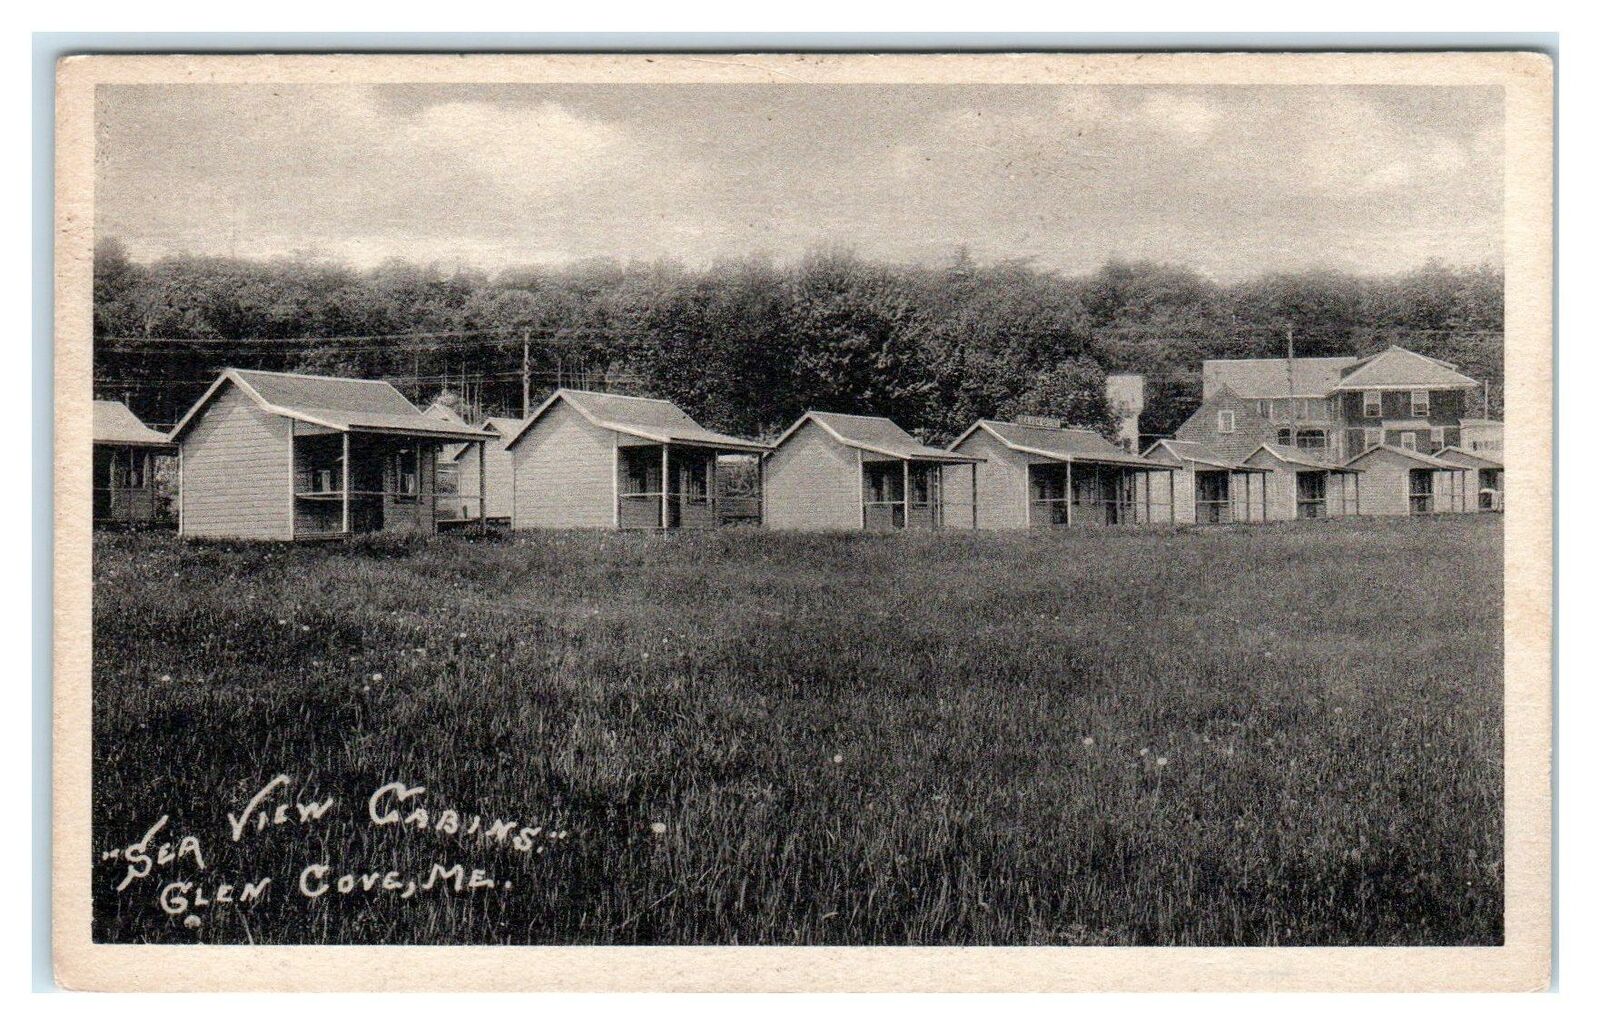 ROCKPORT, ME Maine ~ Roadside SEA VIEW CABINS at Glen Cove c1930s Postcard